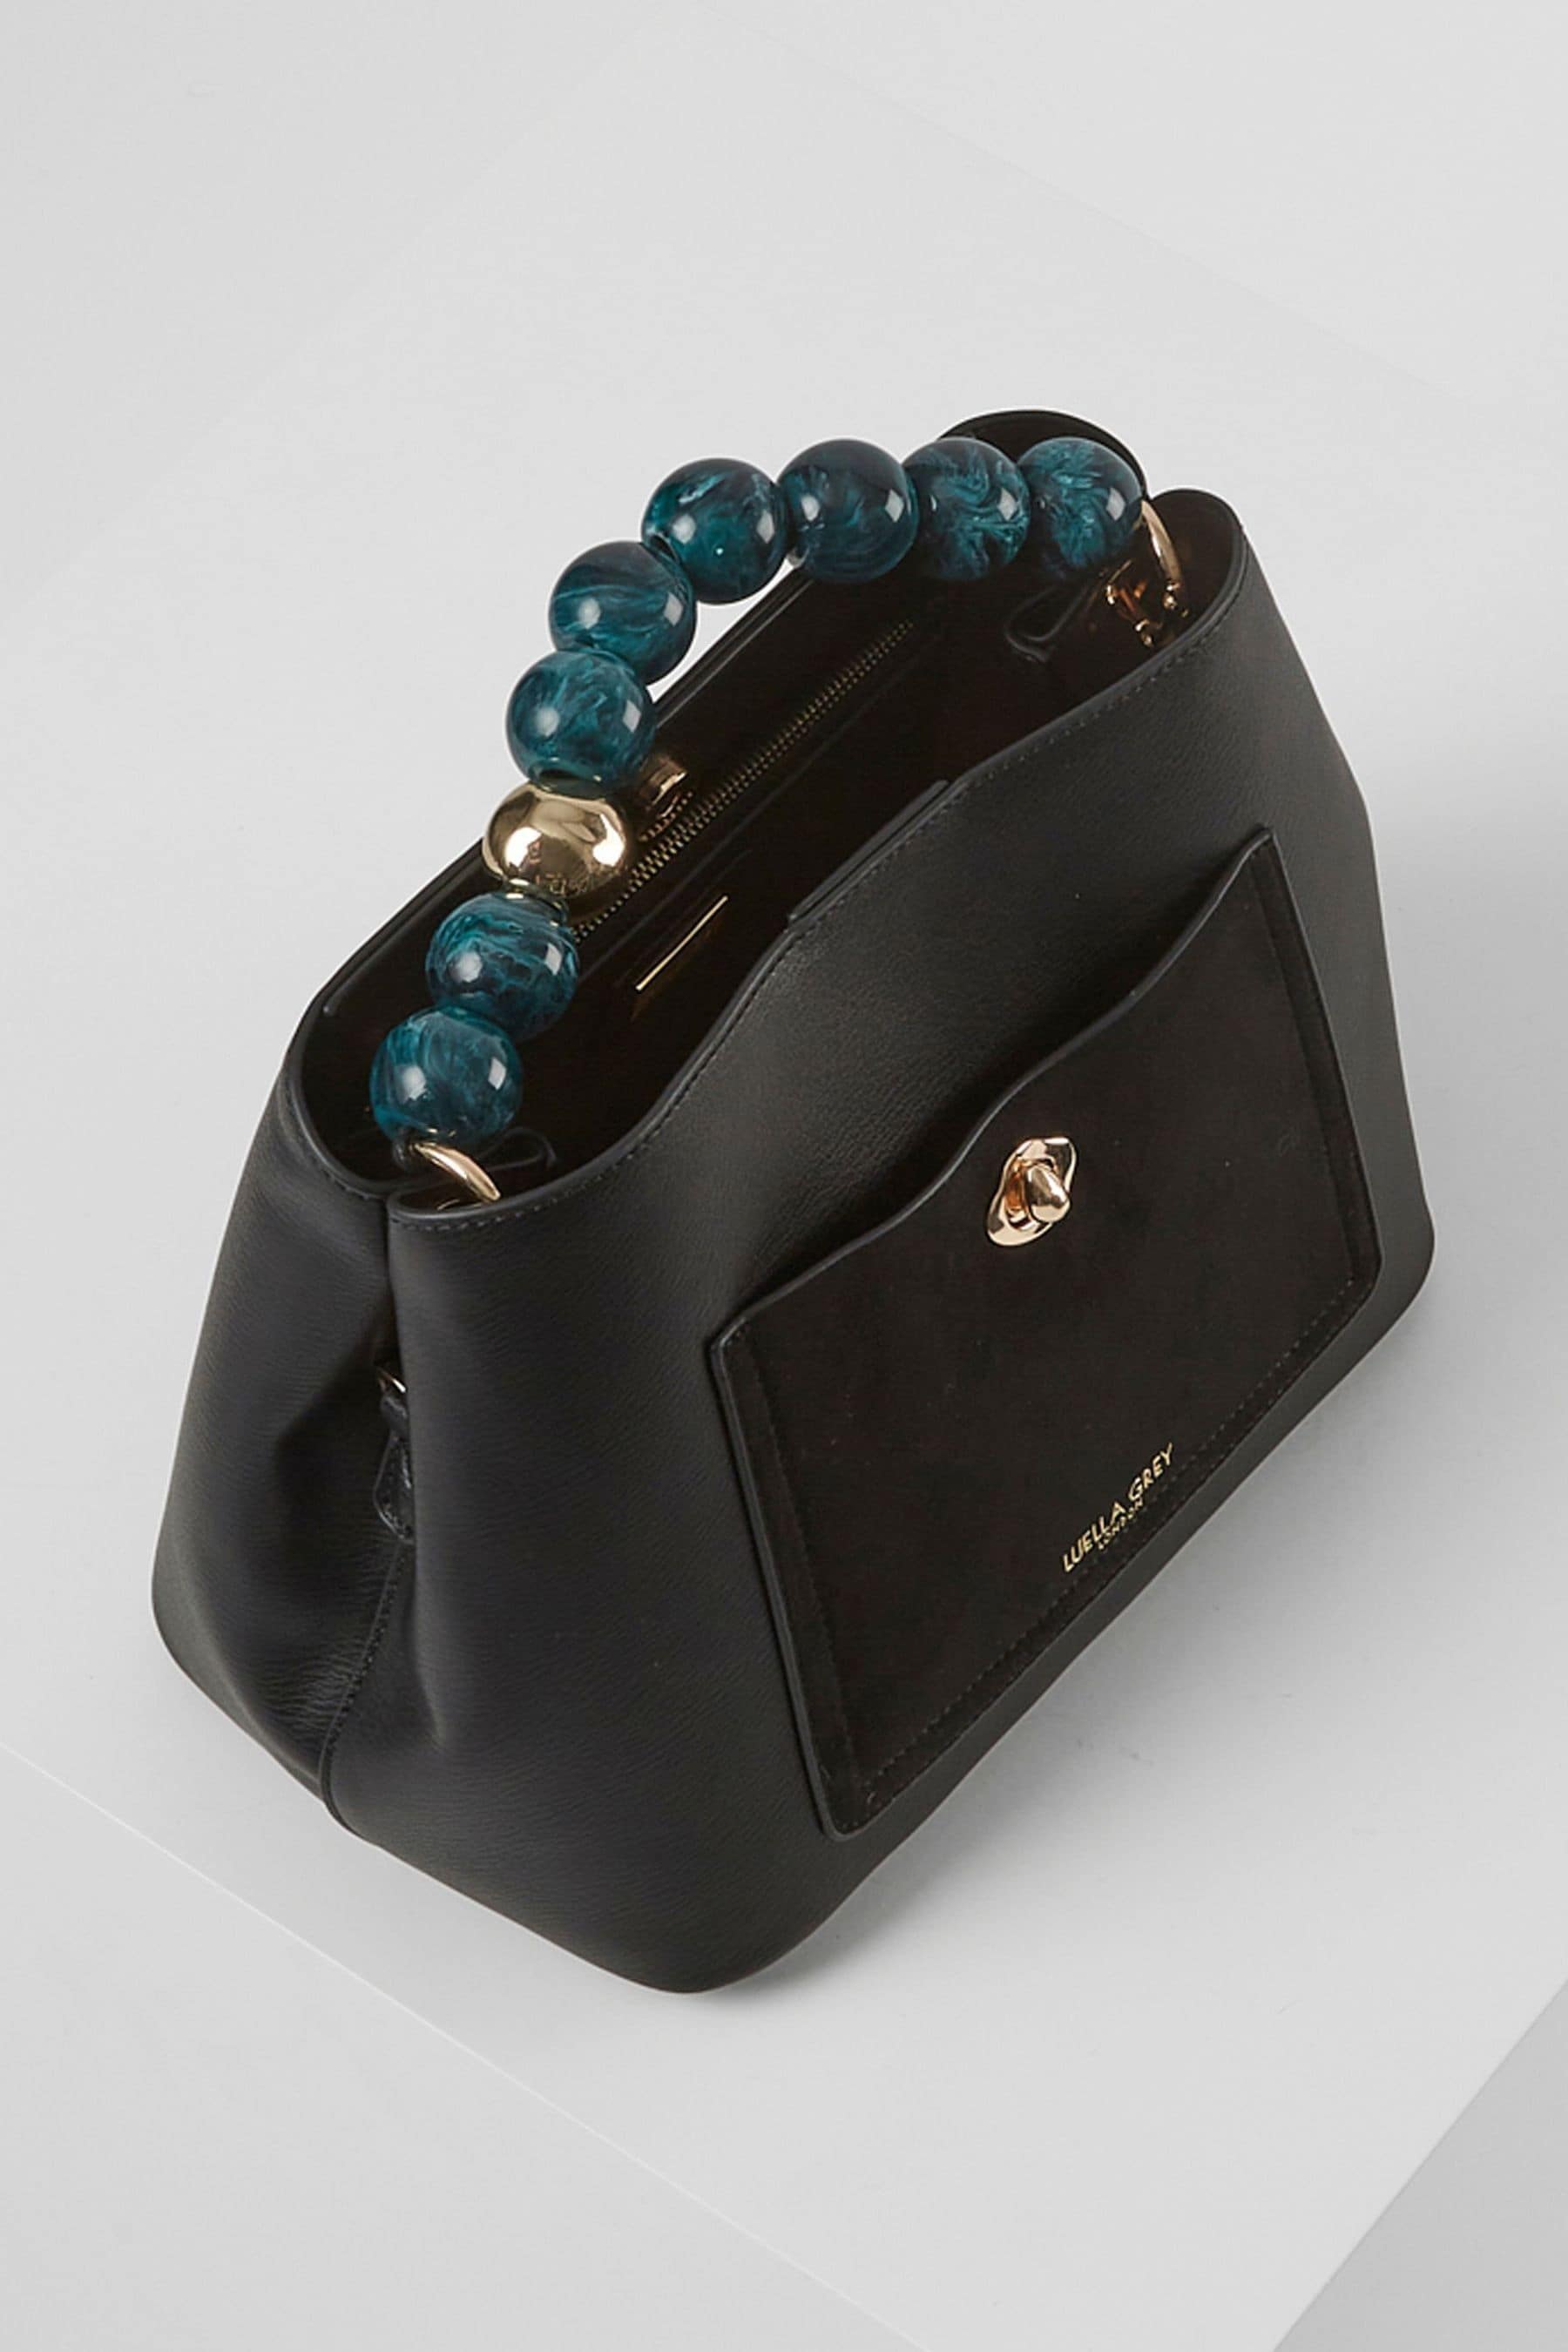 Buy Luella Grey Lucia Black Crossbody Bag from the Next UK online shop